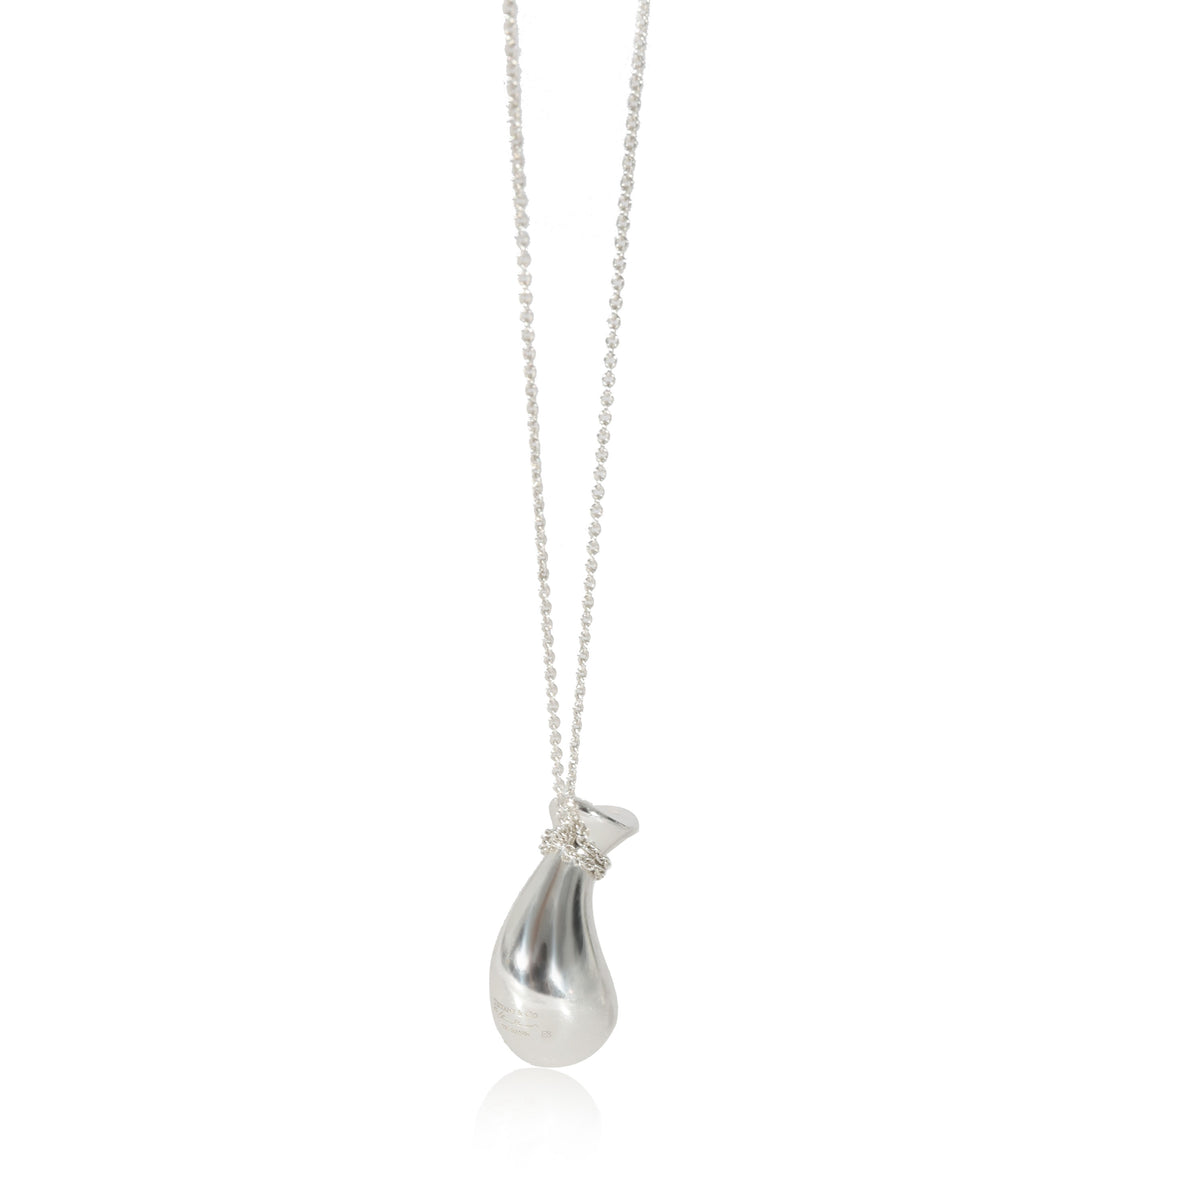 Tiffany & Co. Elsa Peretti Bottle Jug Pendant Necklace in Sterling Silver